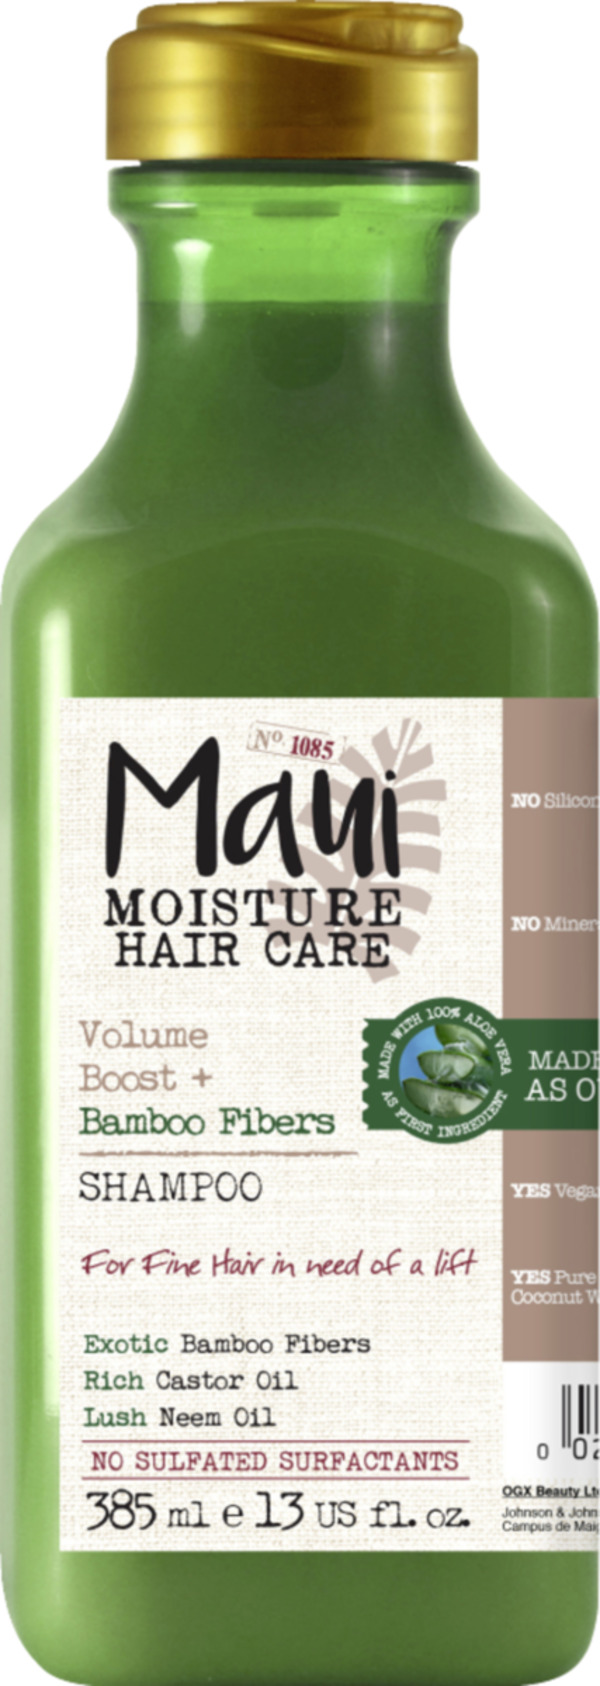 Bild 1 von Maui Moisture Hair Care Volume Boost + Bamboo Fibers Shampoo